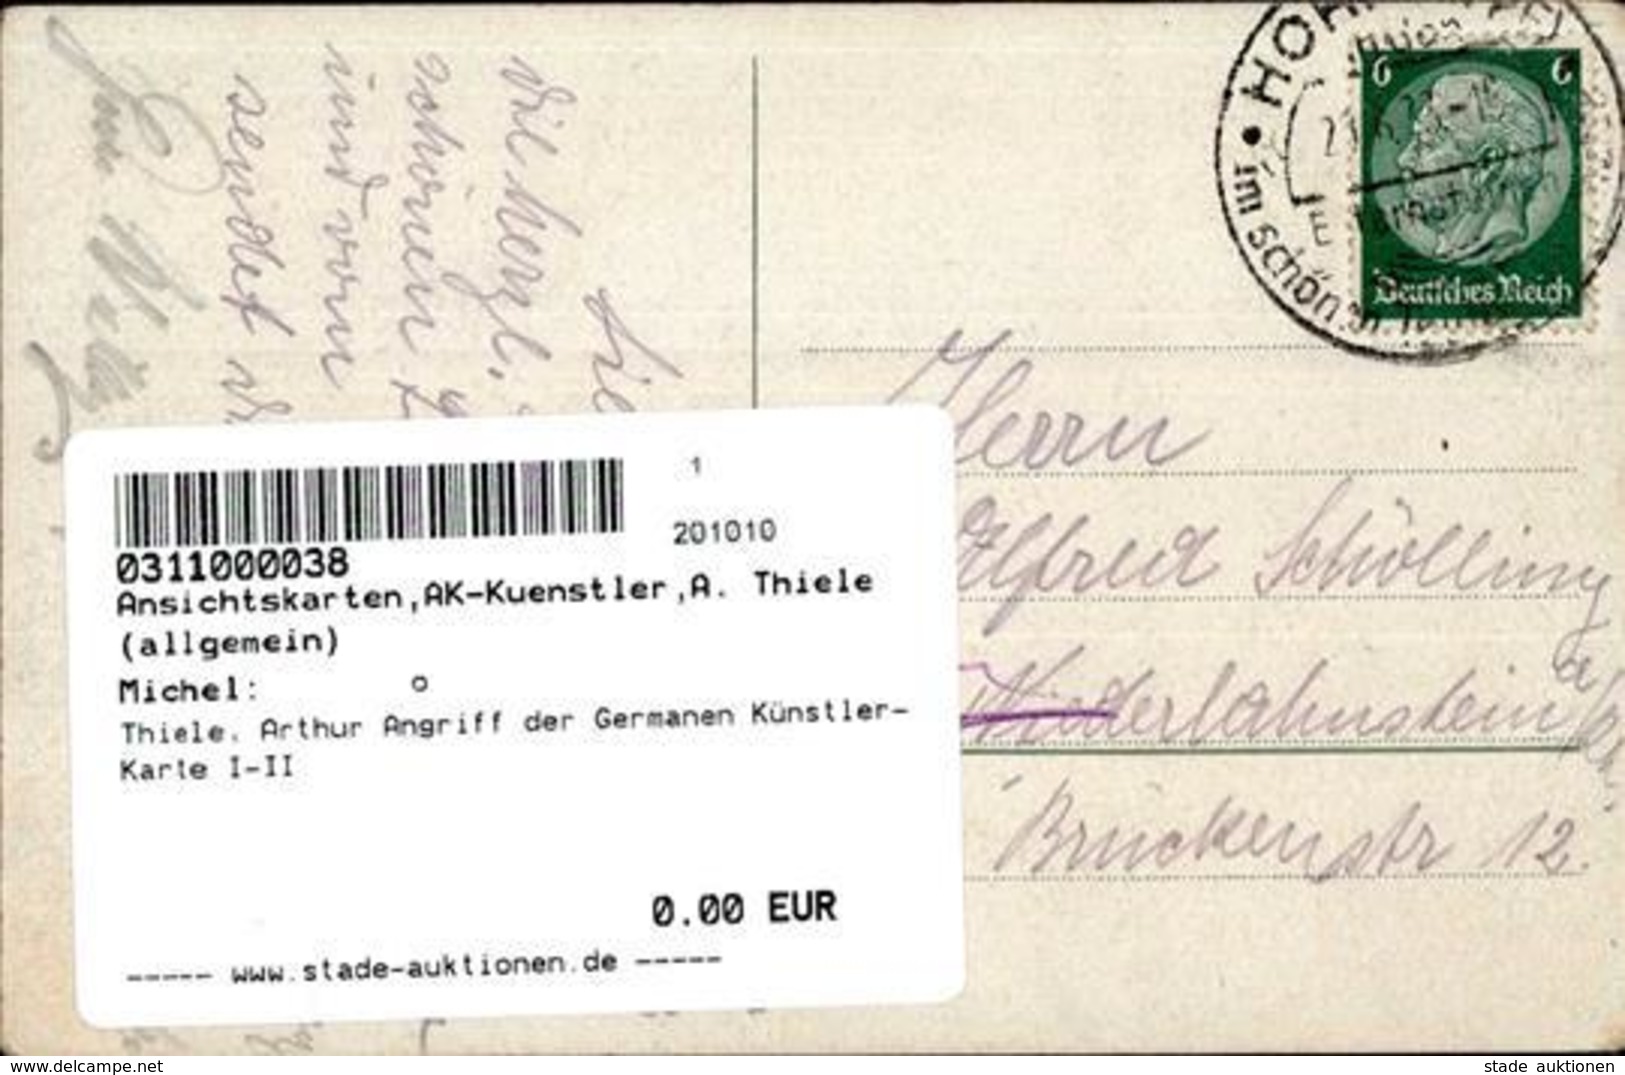 Thiele, Arthur Angriff Der Germanen Künstler-Karte I-II - Thiele, Arthur